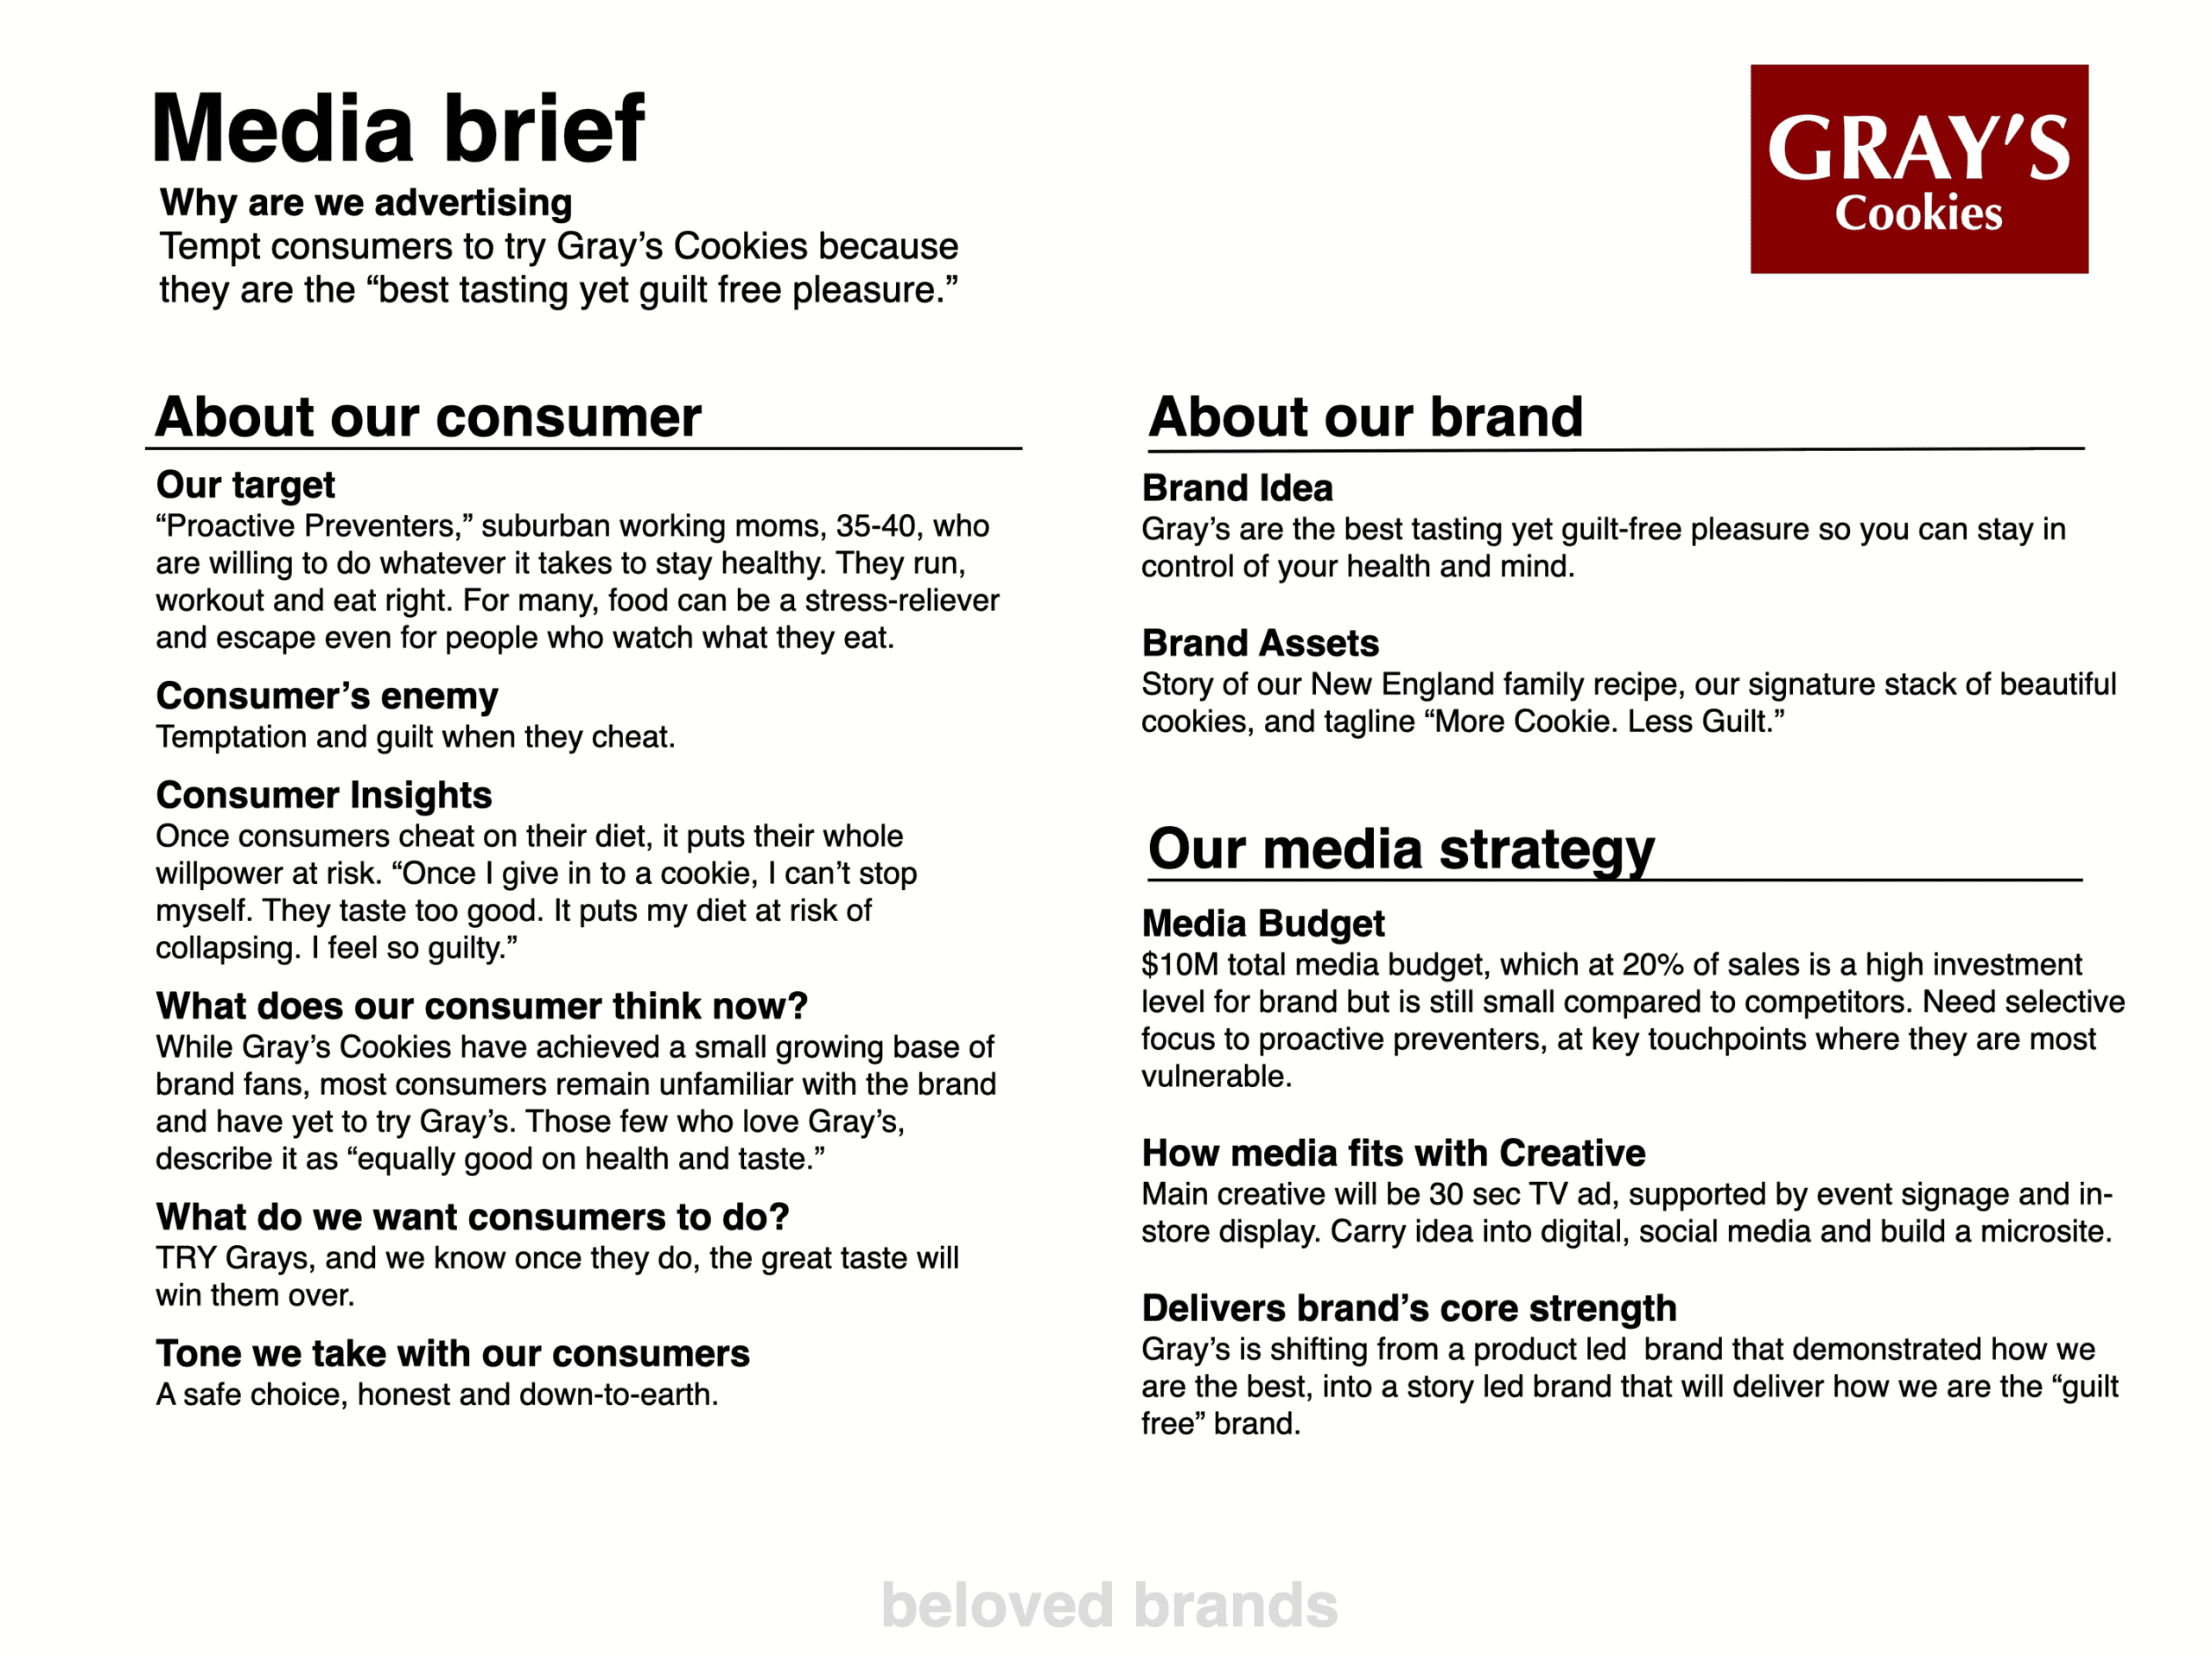 Media Brief template